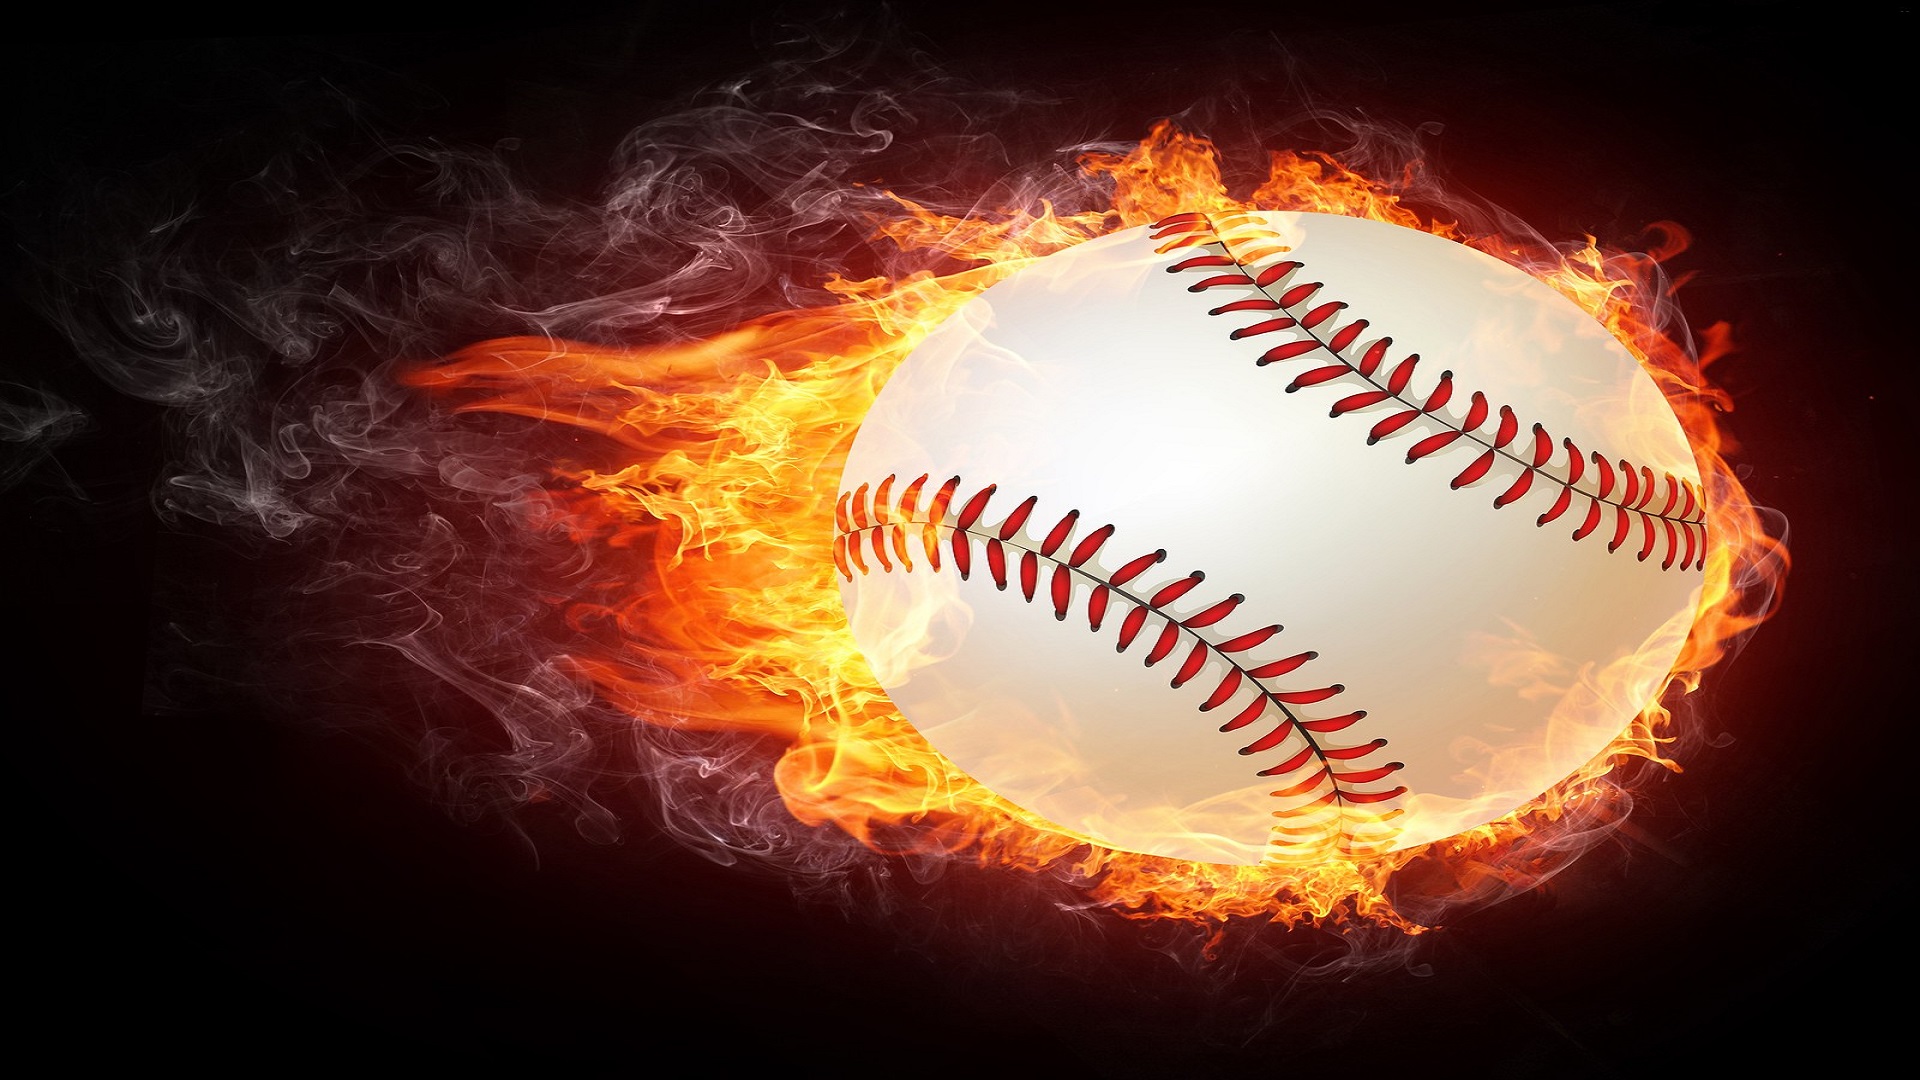 Fire Baseball Image Free Hd Wallpaper For Desktop